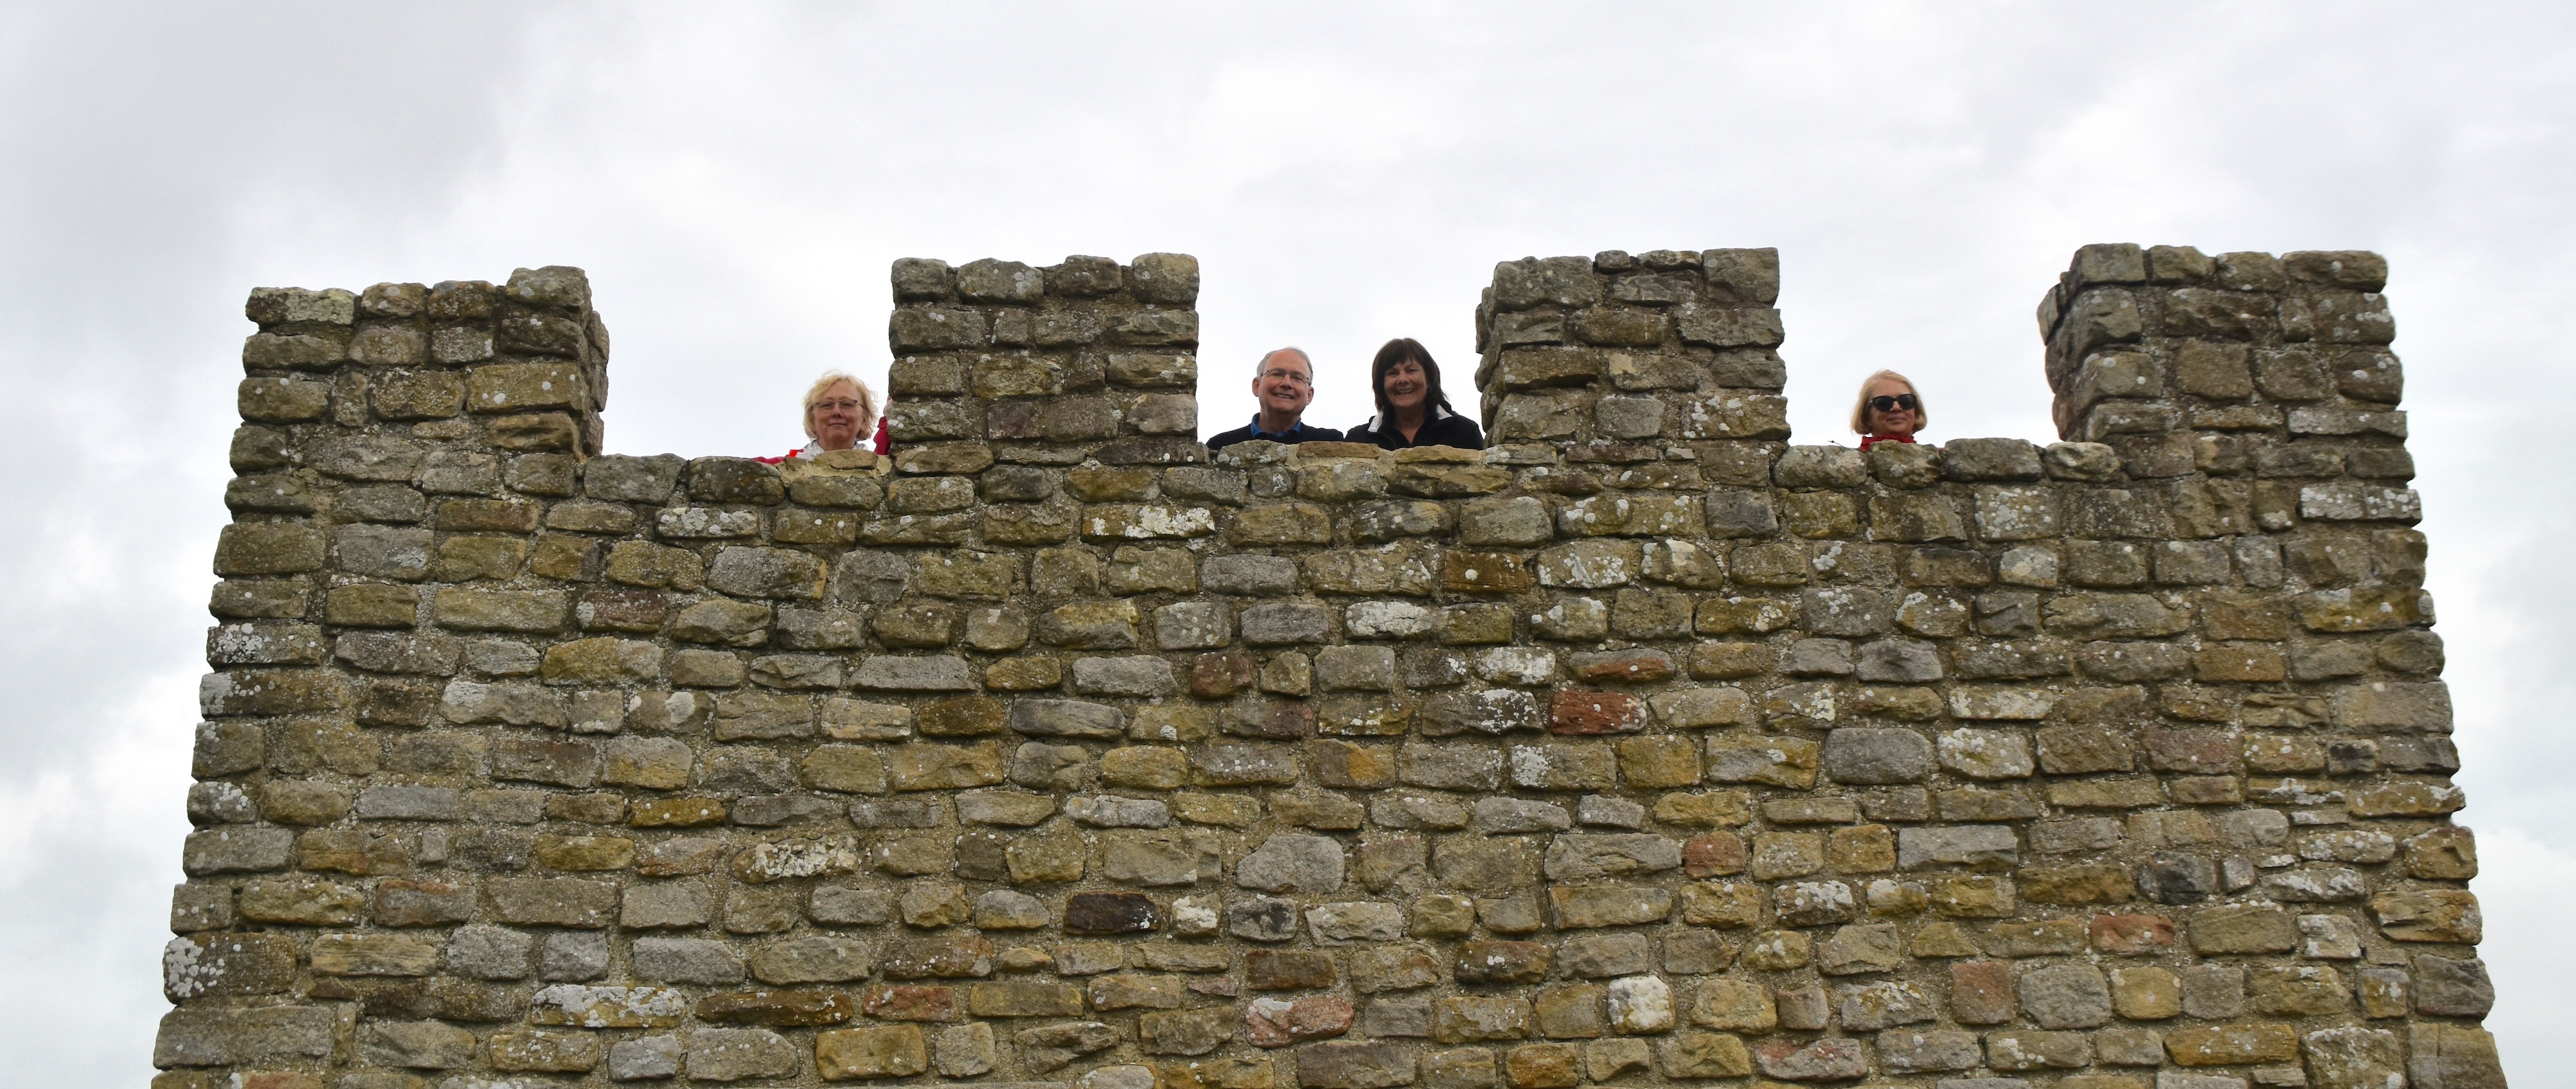 On Hadrian's Wall, Vindolanda